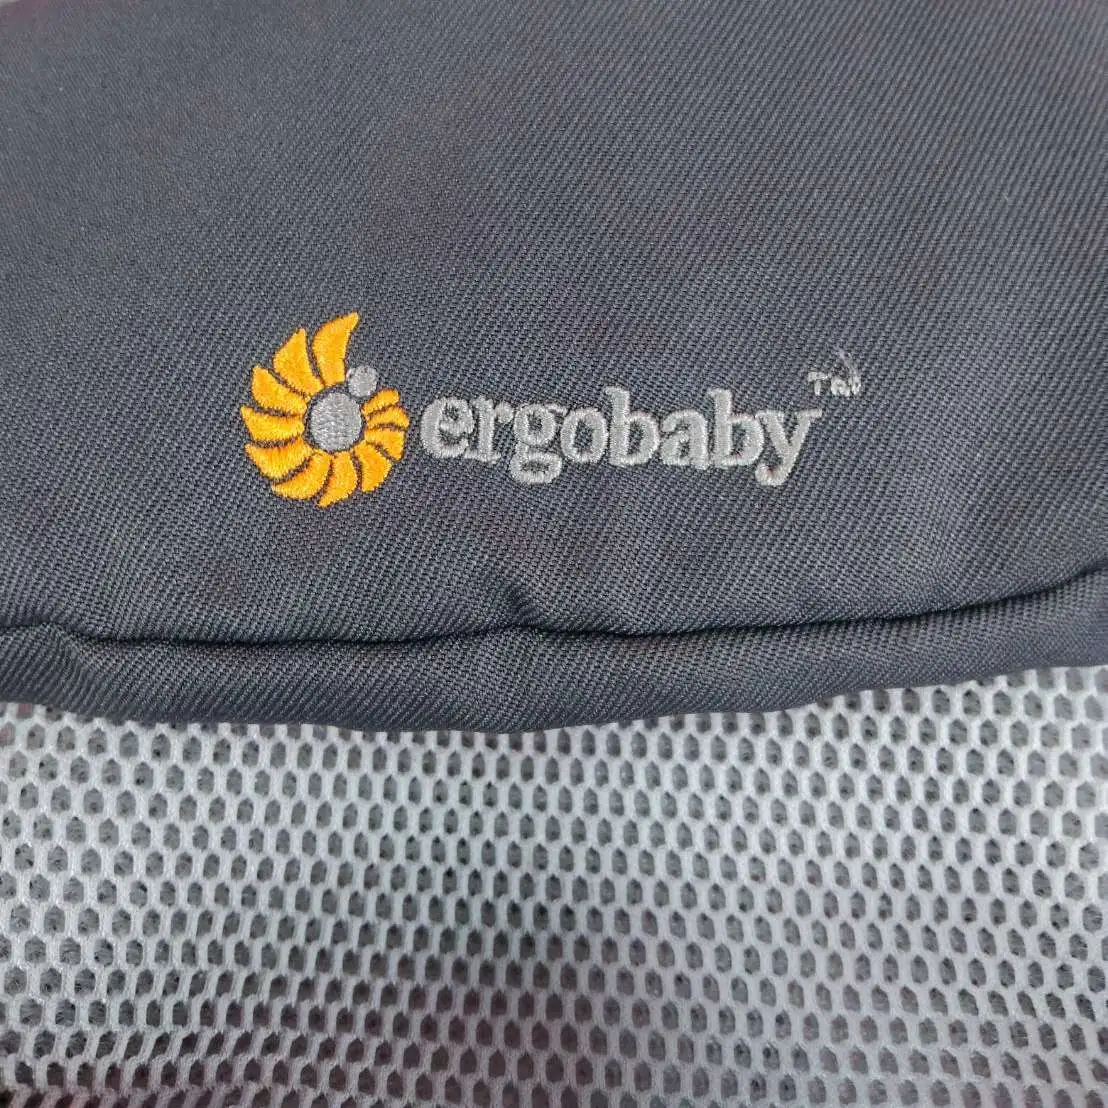 ergobaby เป้อุ้มเด็ก 360 4 position baby carrier